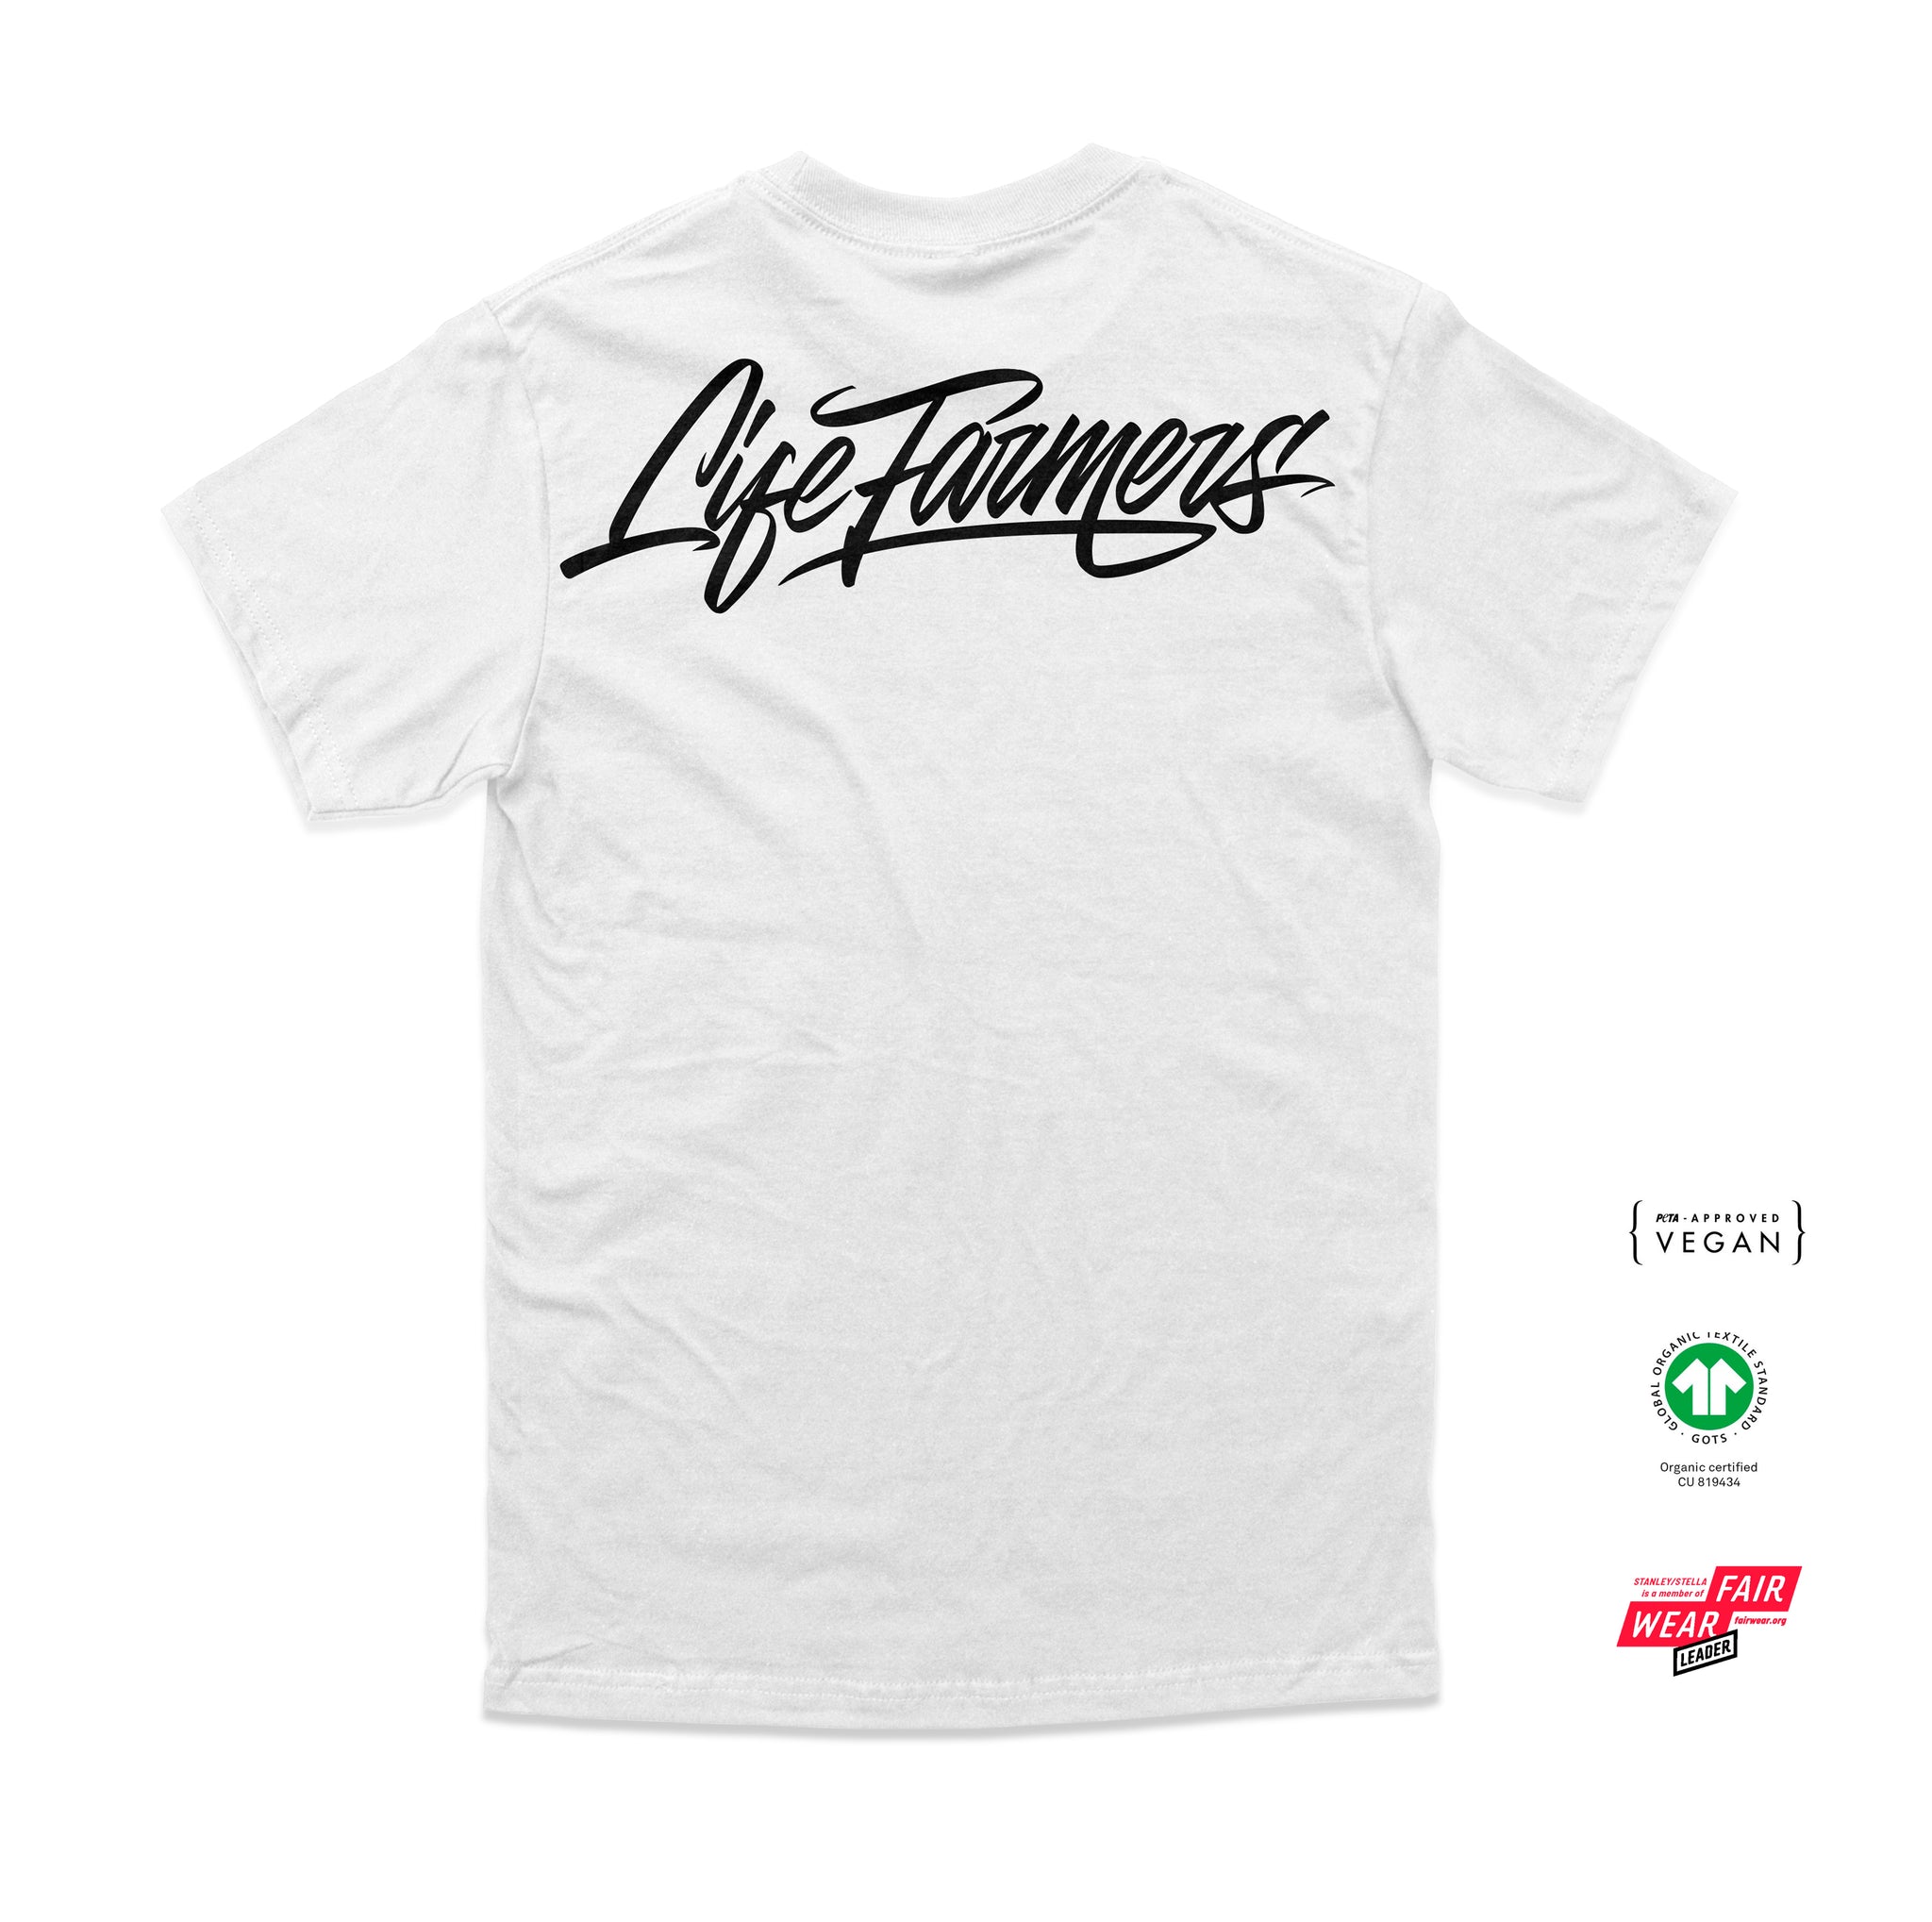 Camiseta Lifefarmers pro